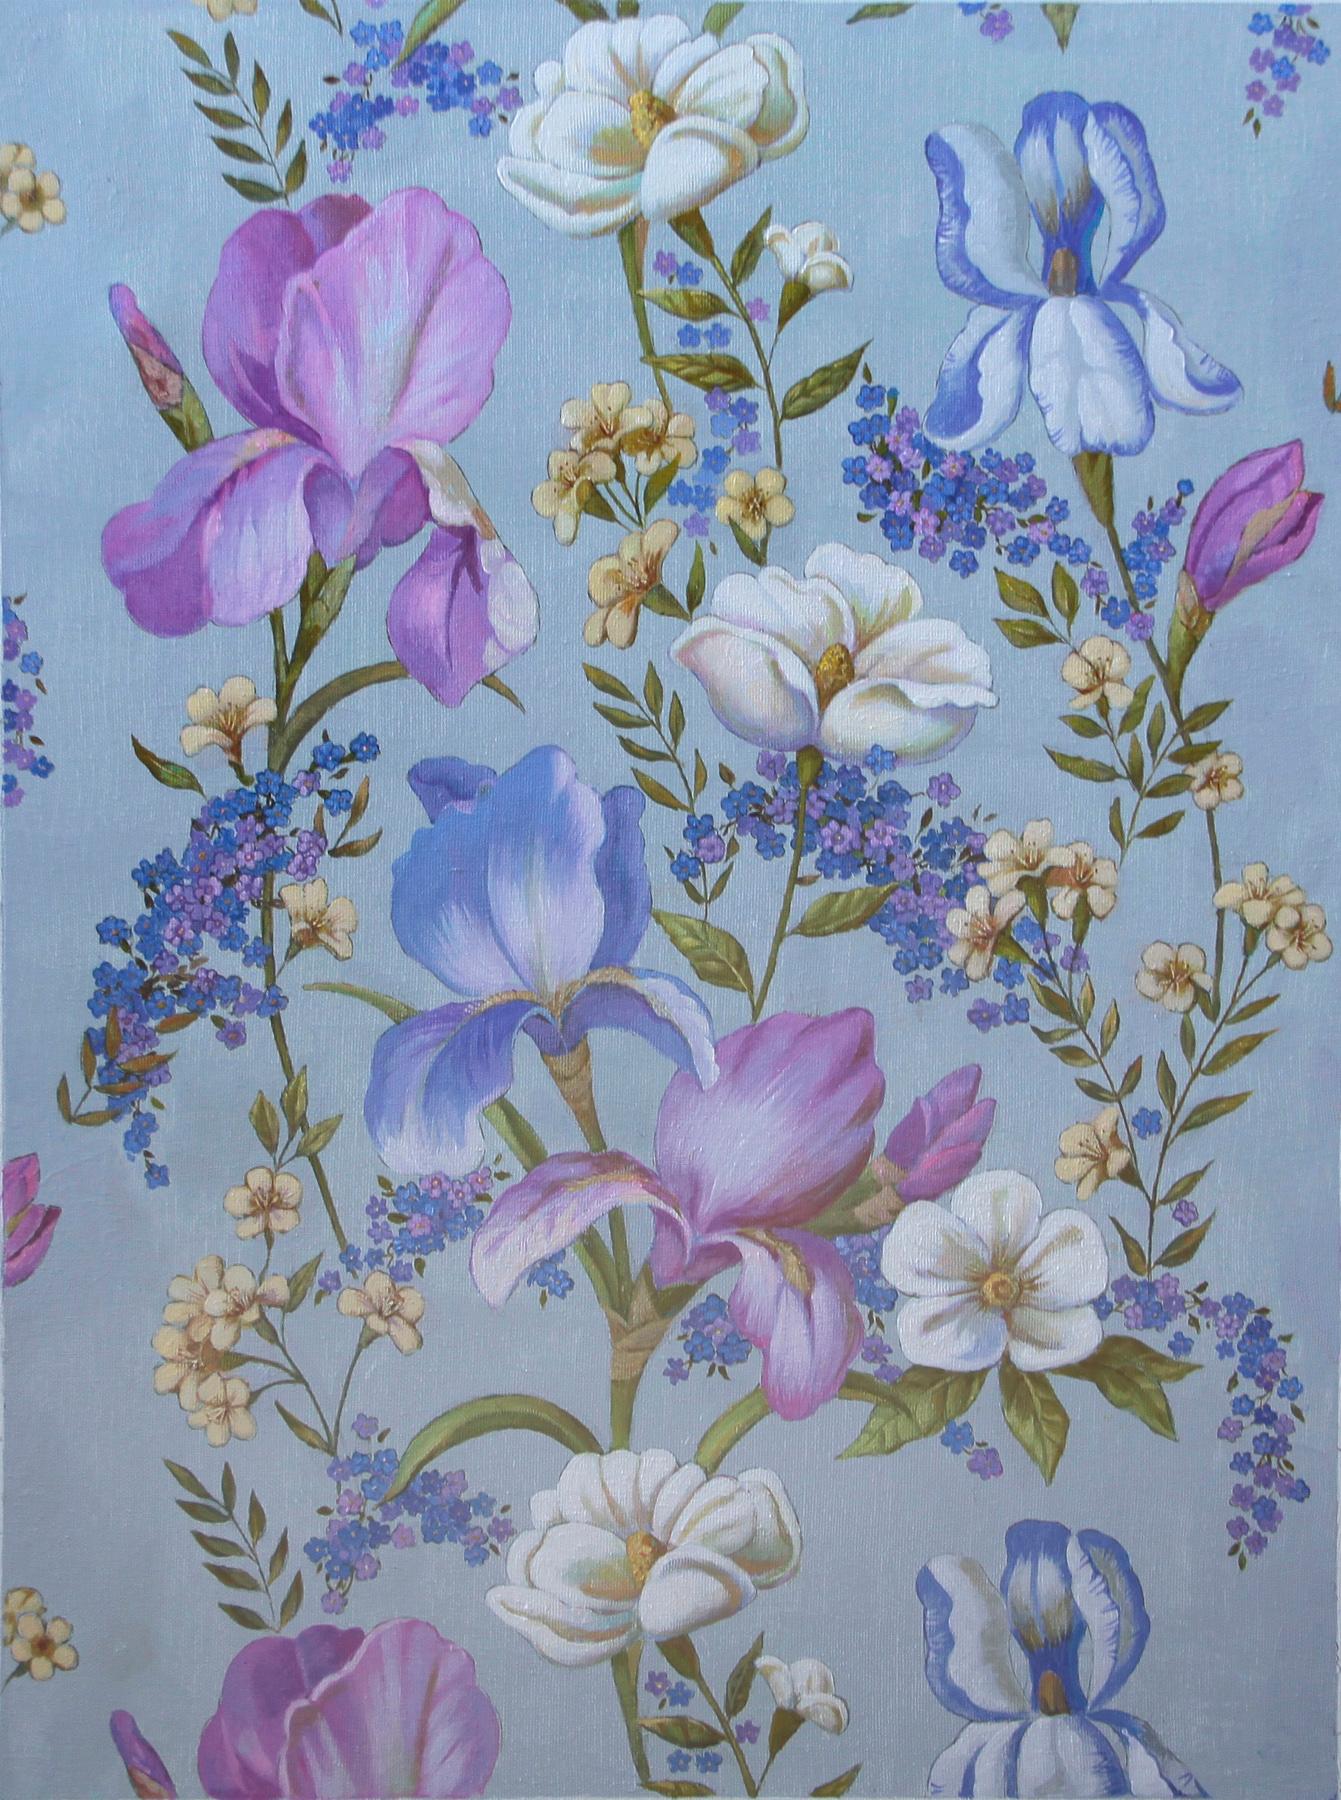 Decorative panel with irises. Original modern art painting